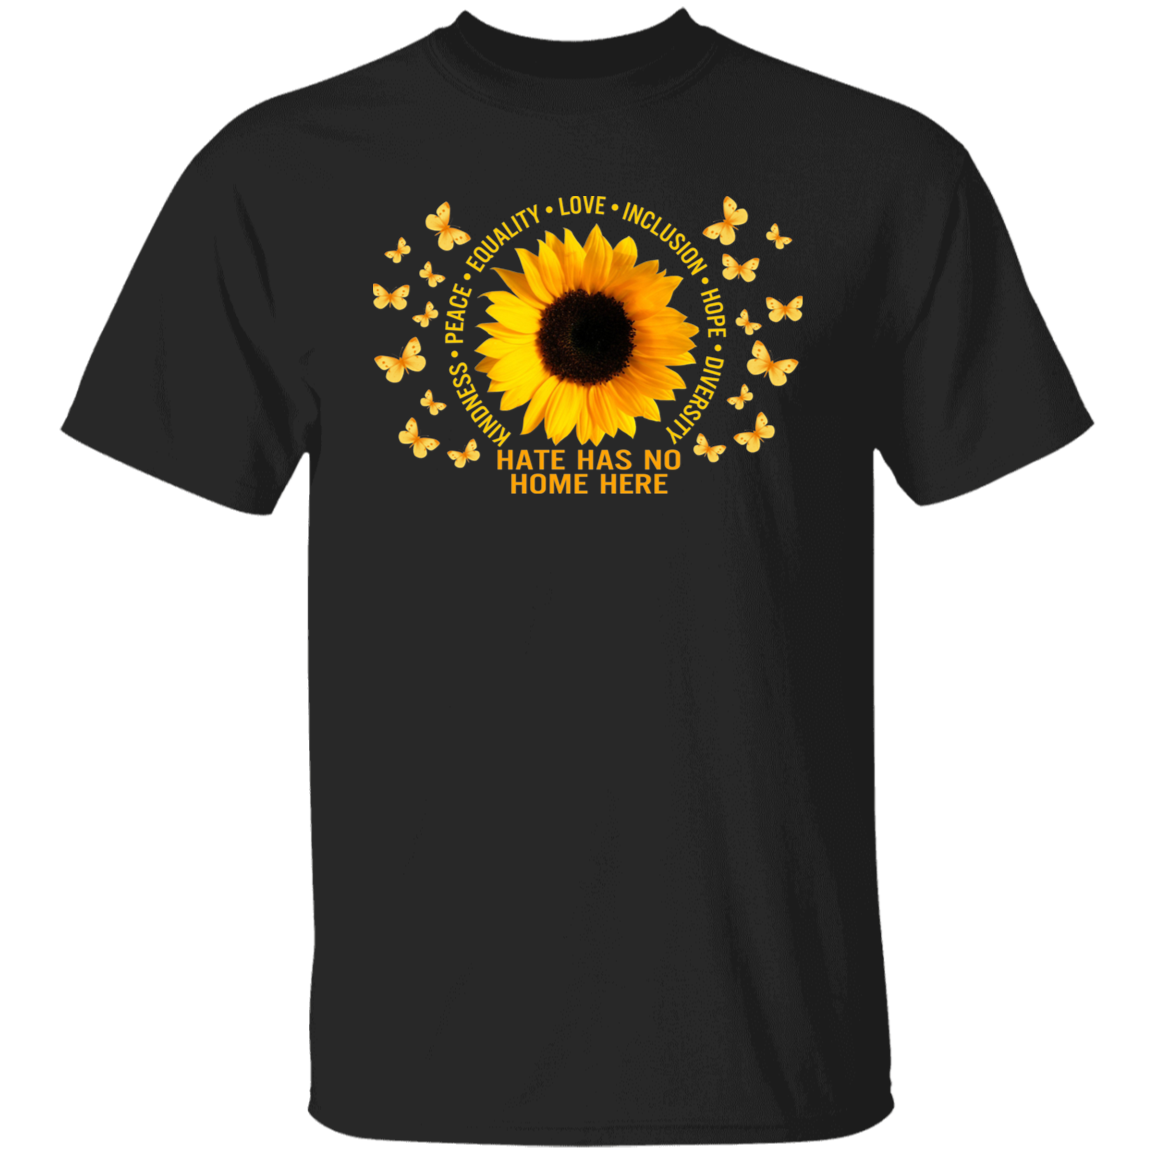 Hate has no home here sunflower shirt